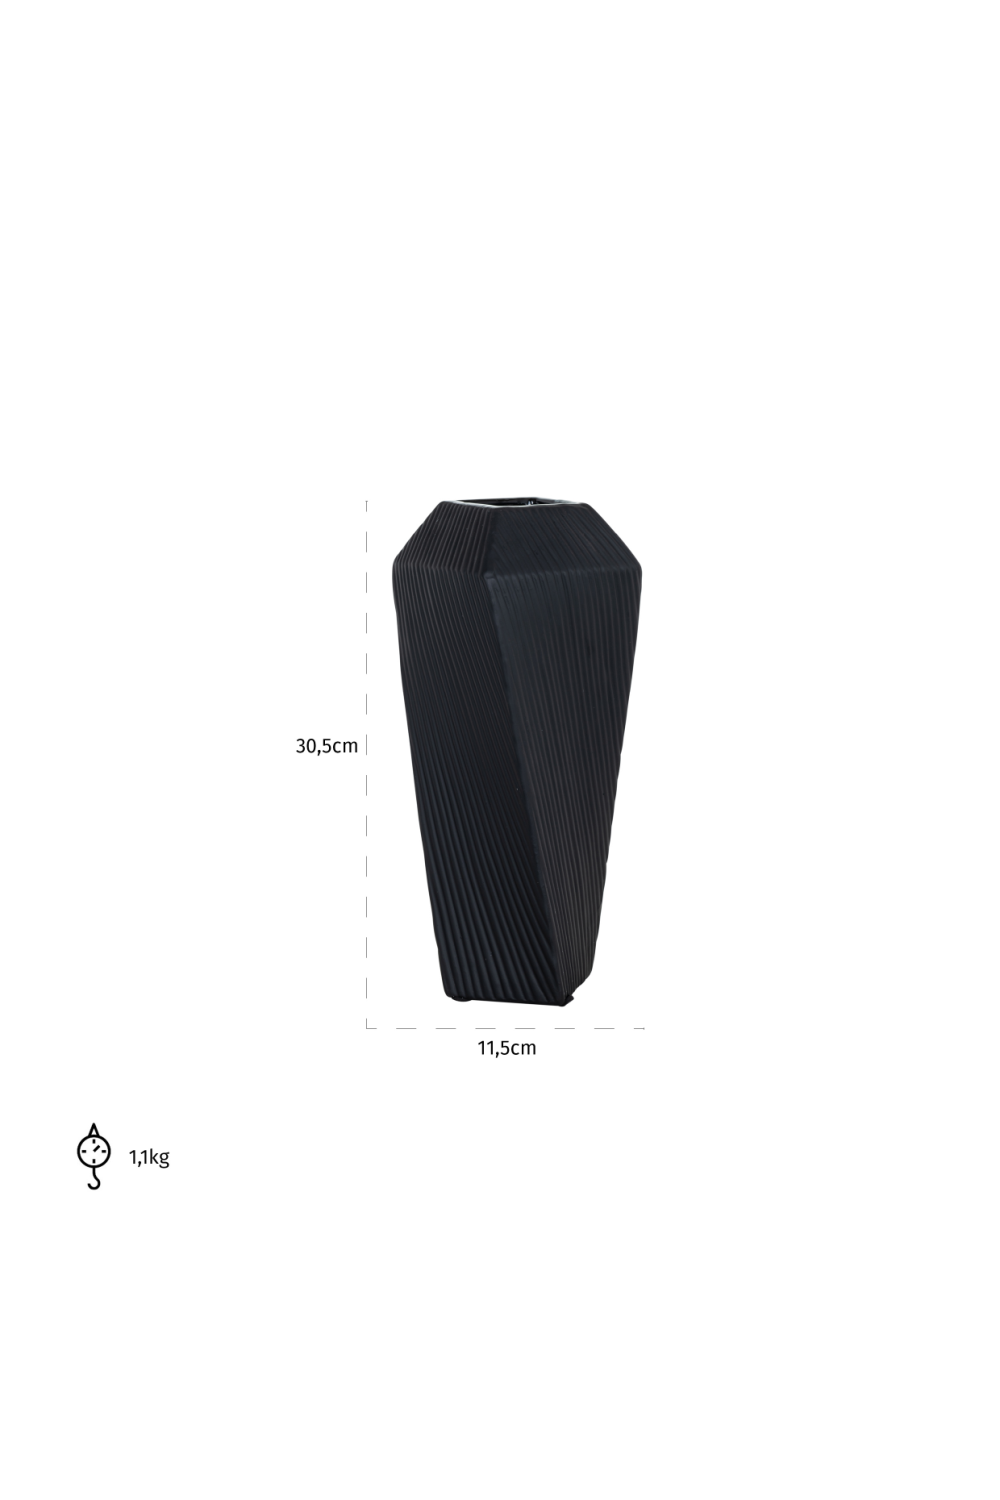 Black Ceramic Geometrical Vase L | OROA Arturo | OROA.com